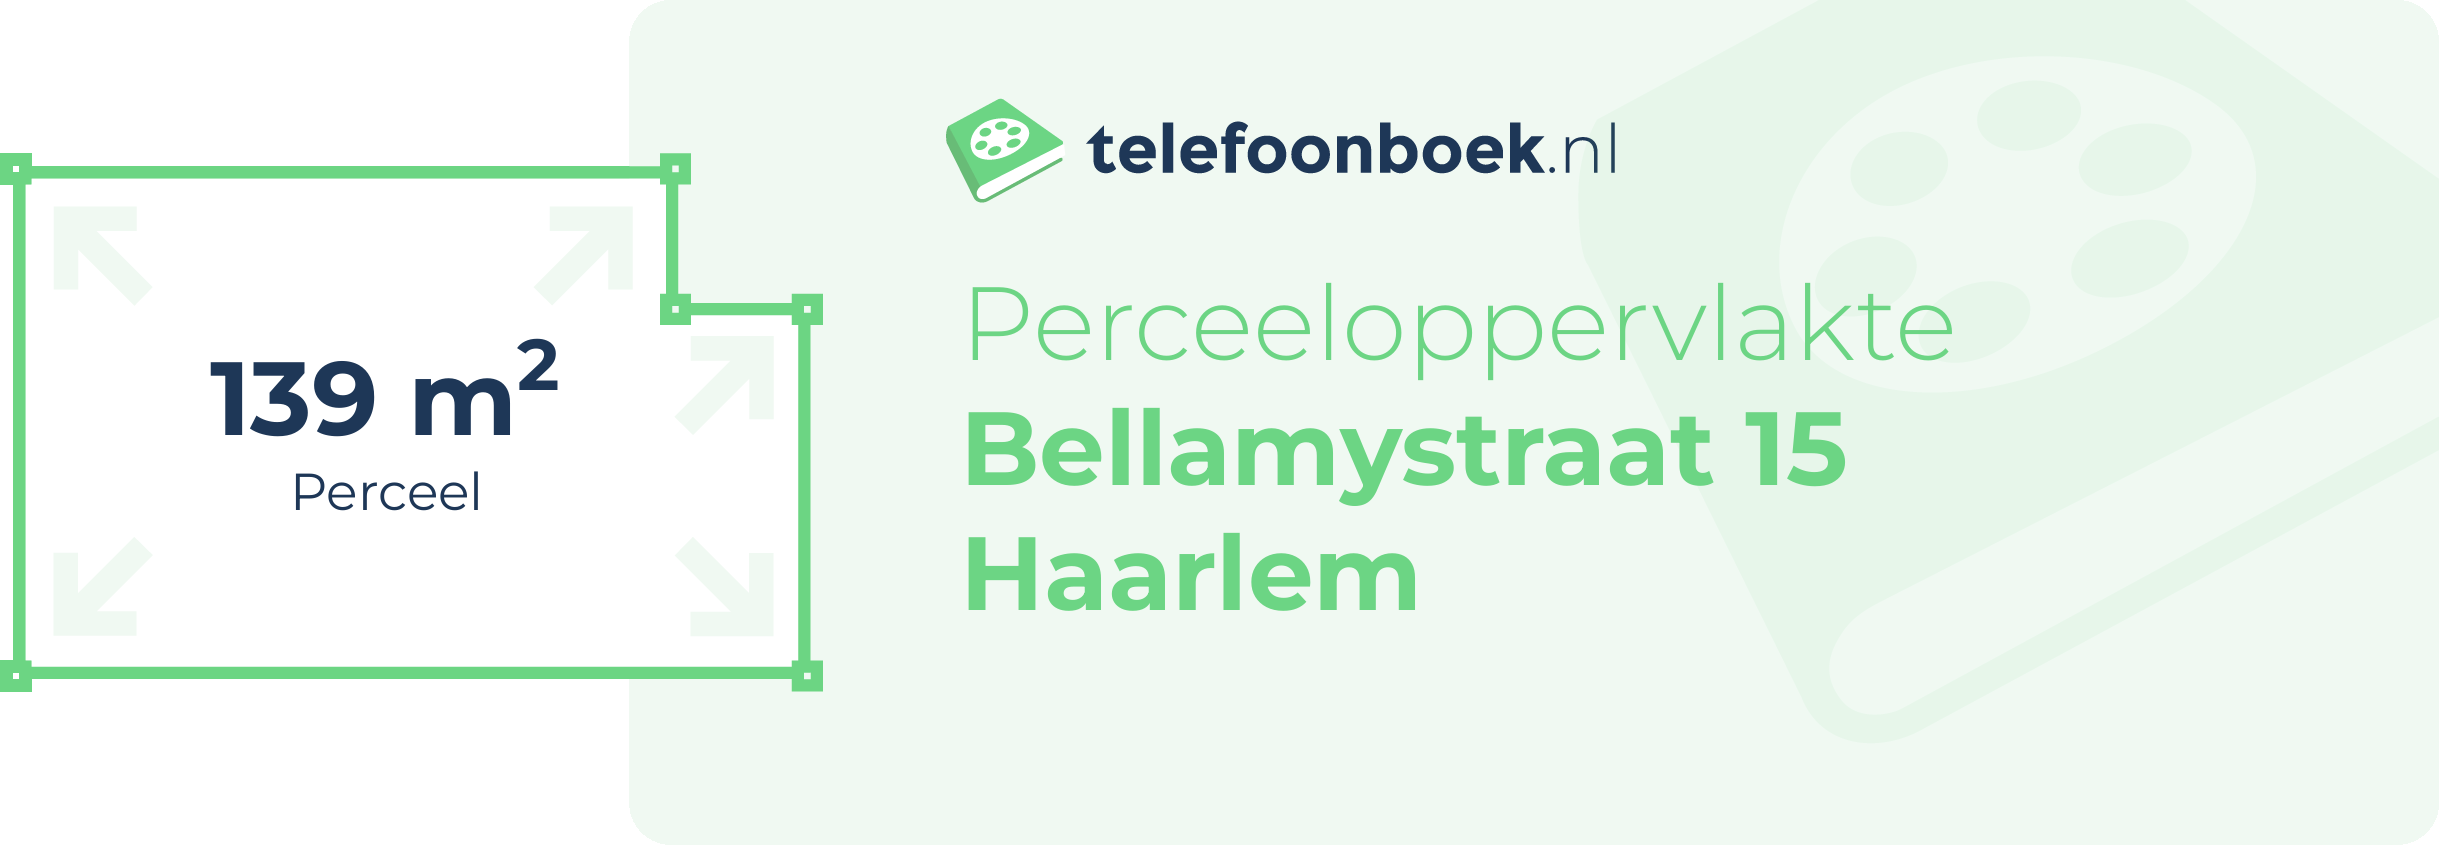 Perceeloppervlakte Bellamystraat 15 Haarlem